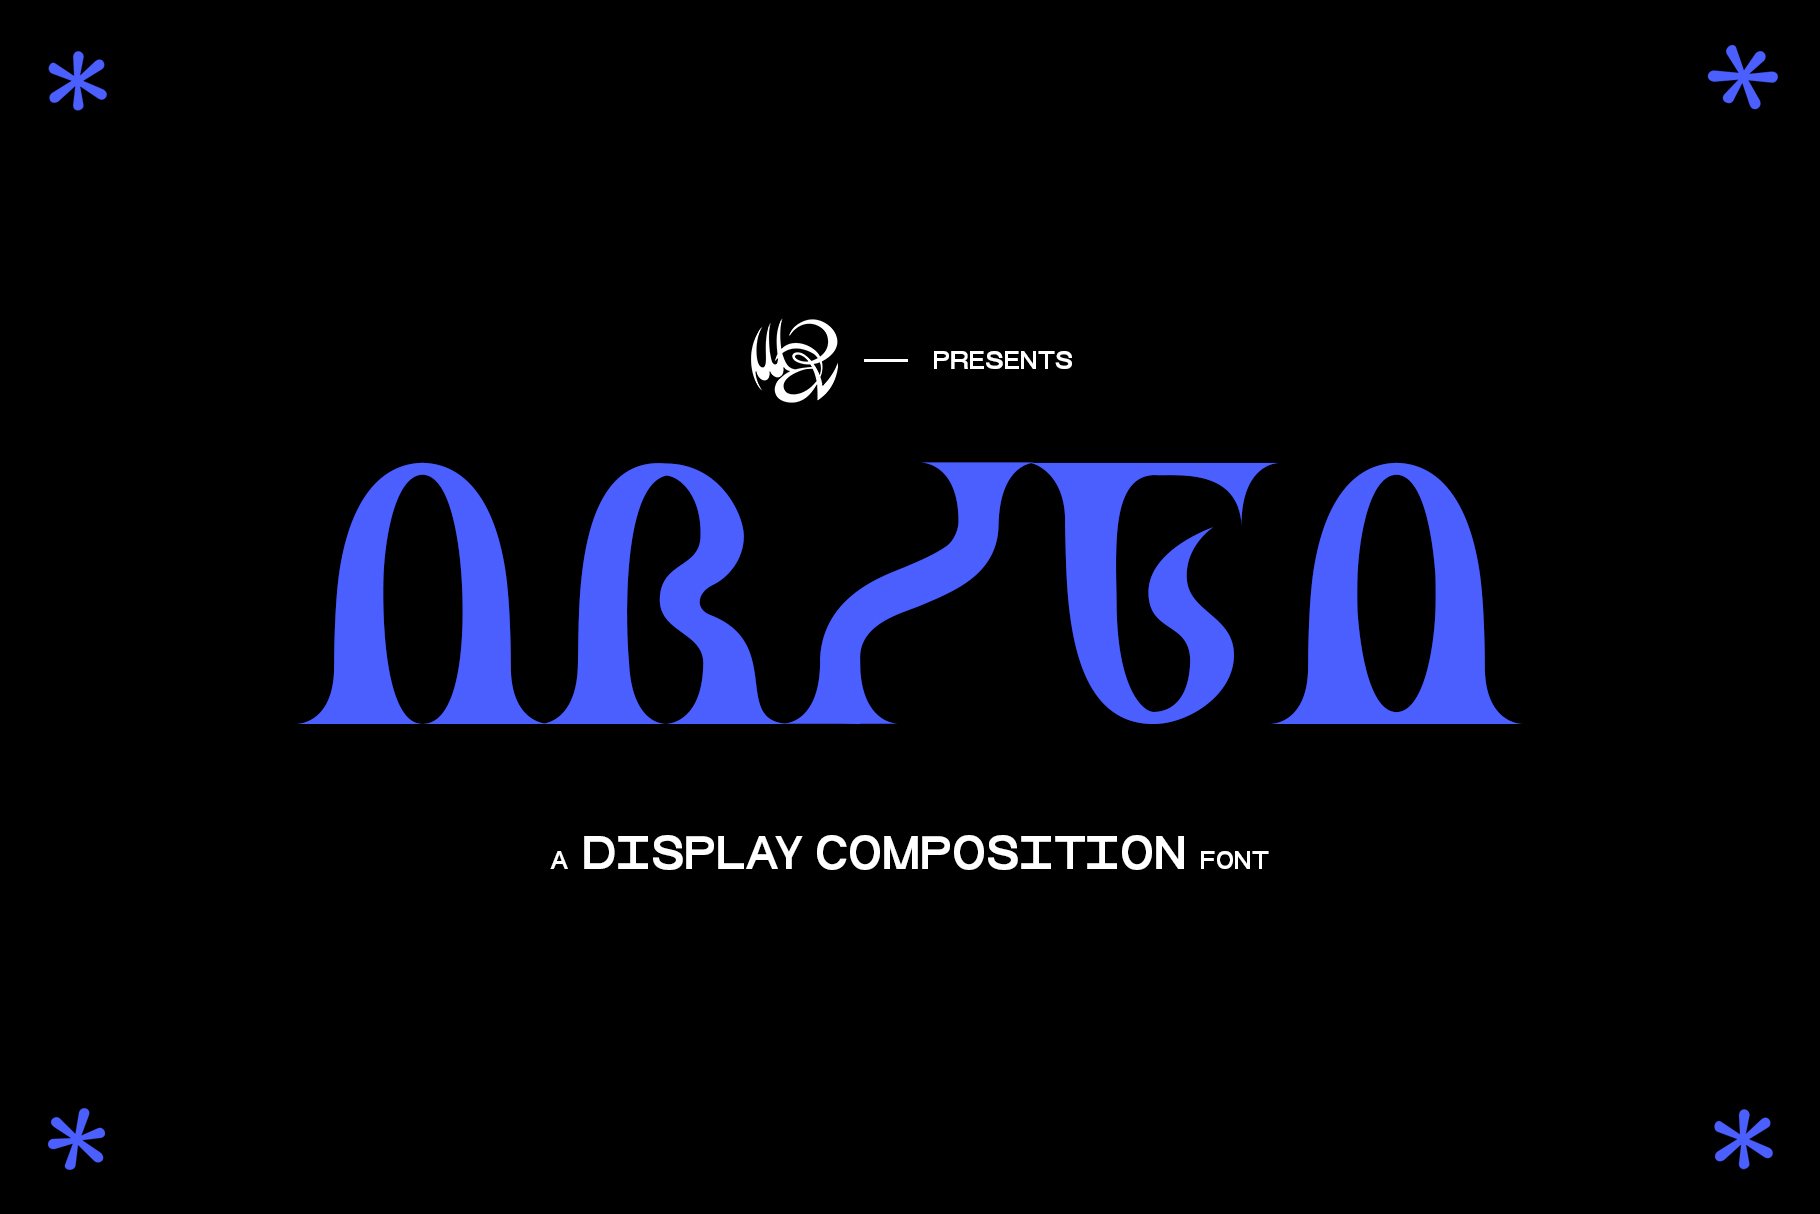 ARIGO Display Composition Font cover image.